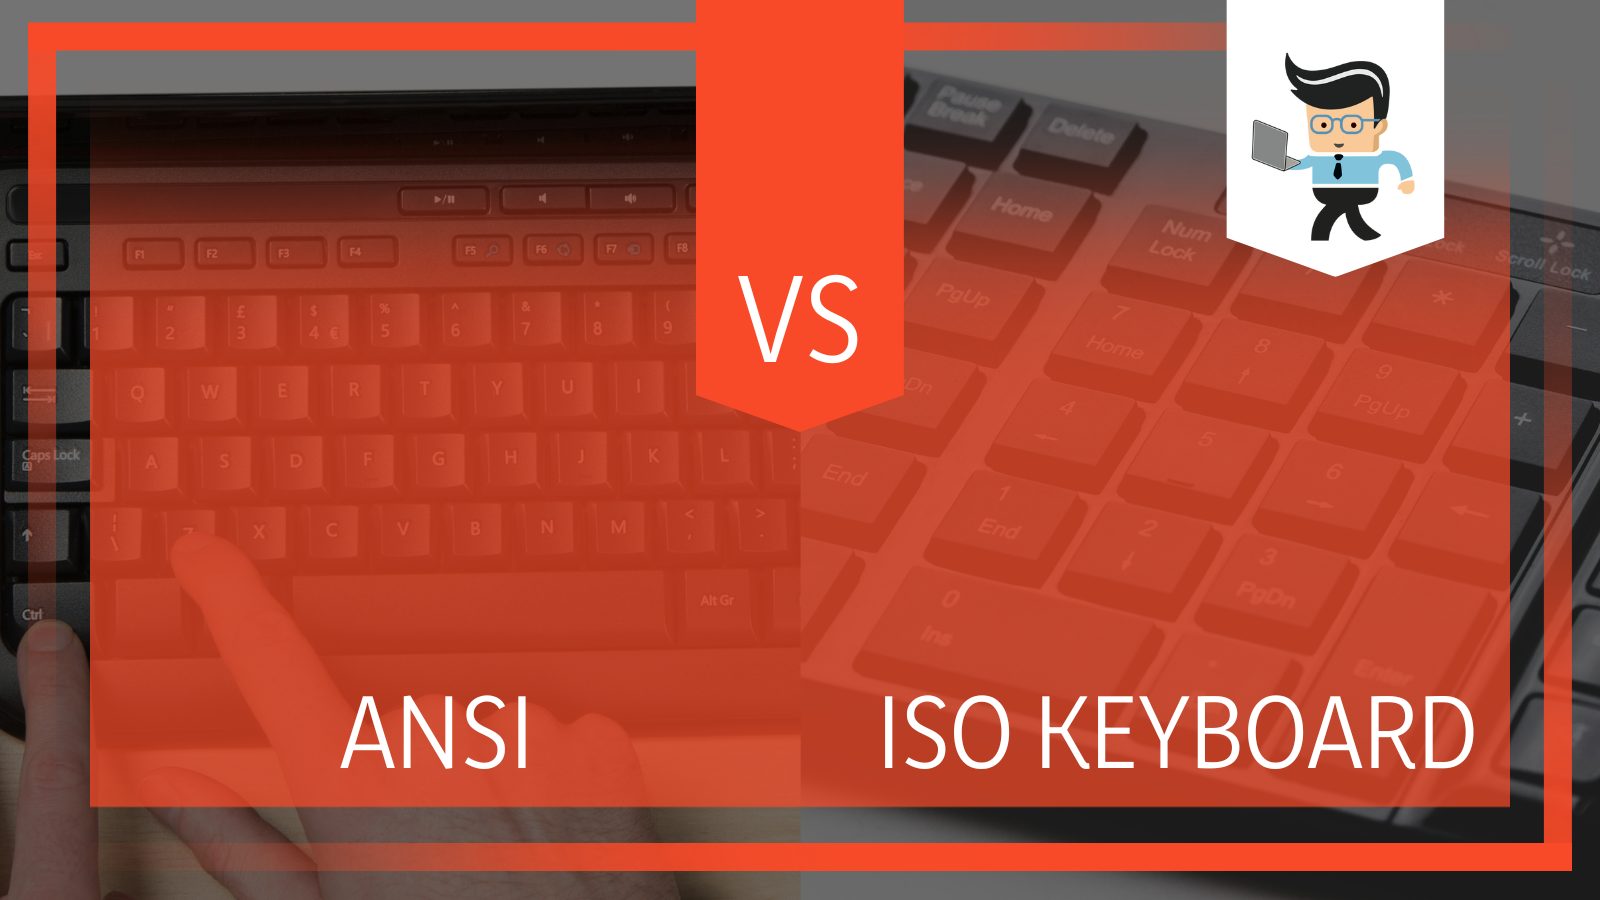 Ansi vs iso keyboard layouts